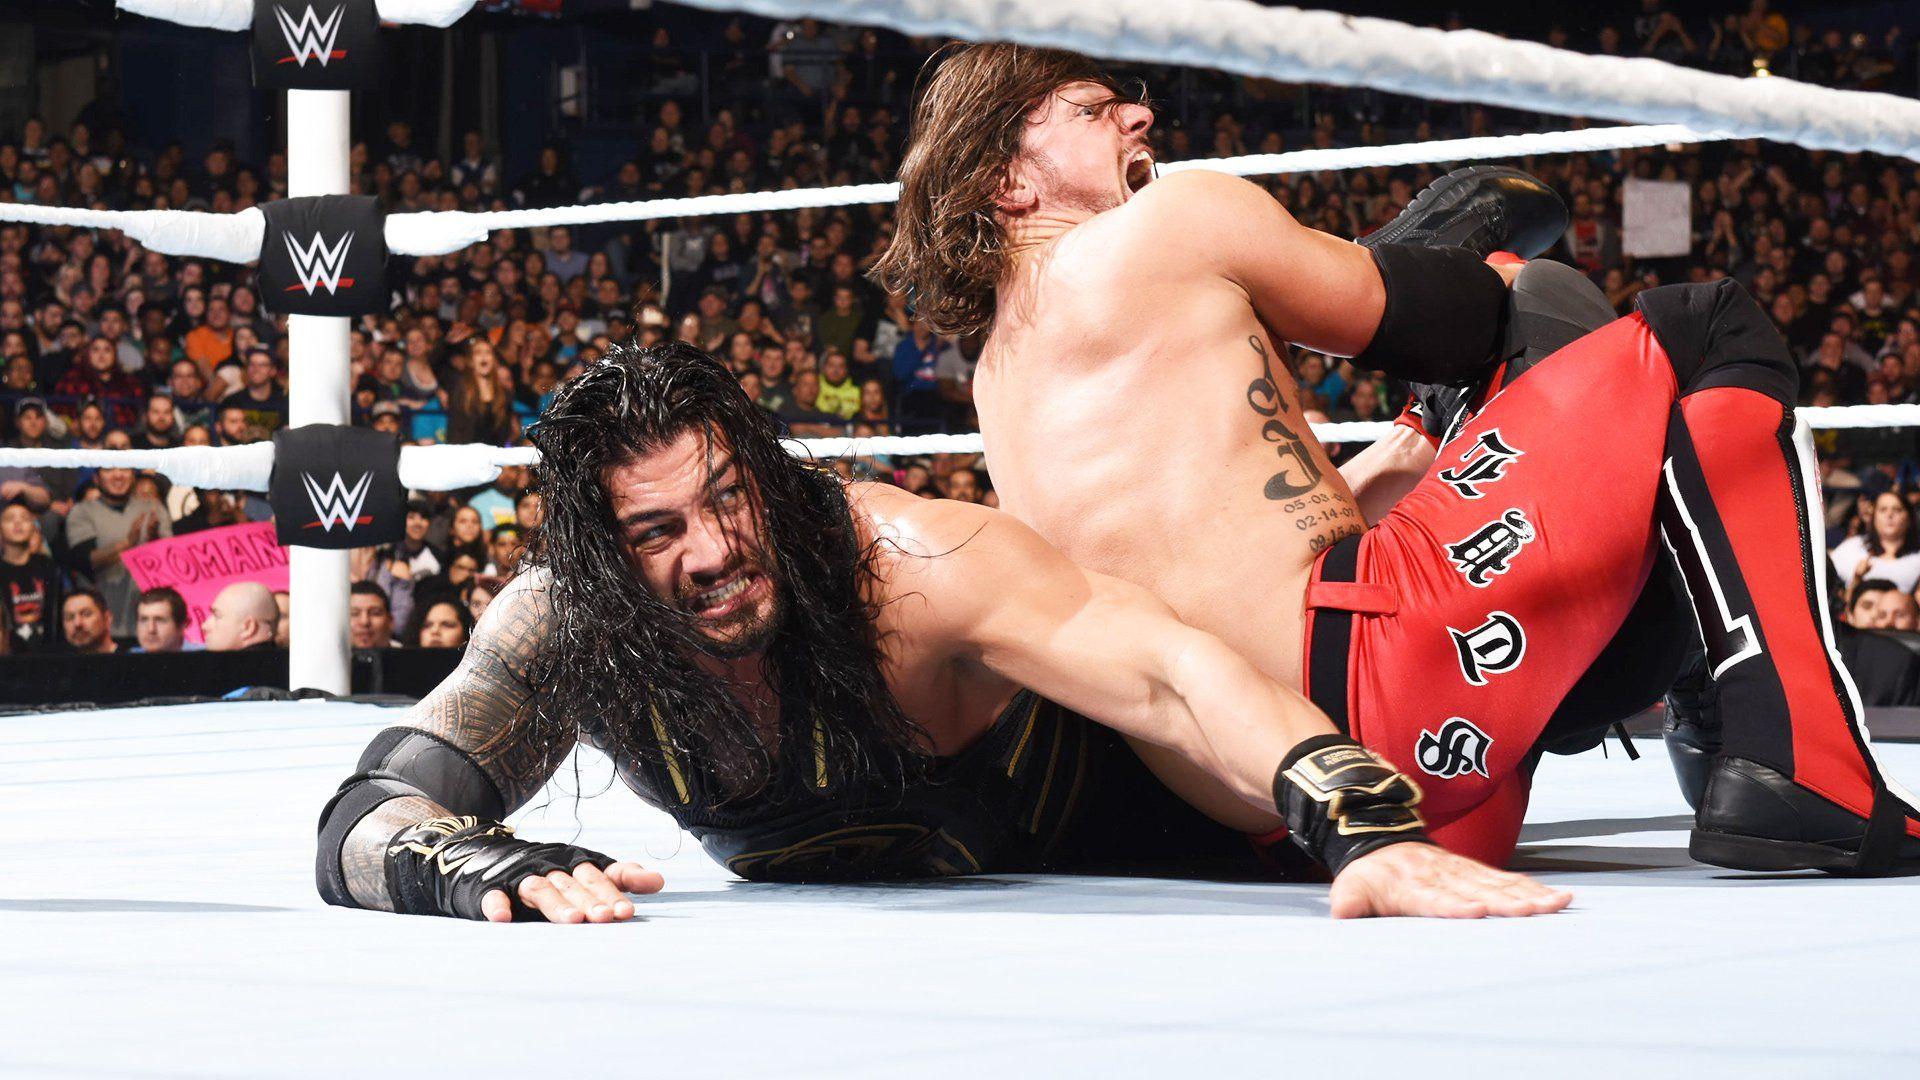 WWE World Heavyweight Champion Roman Reigns def. AJ Styles